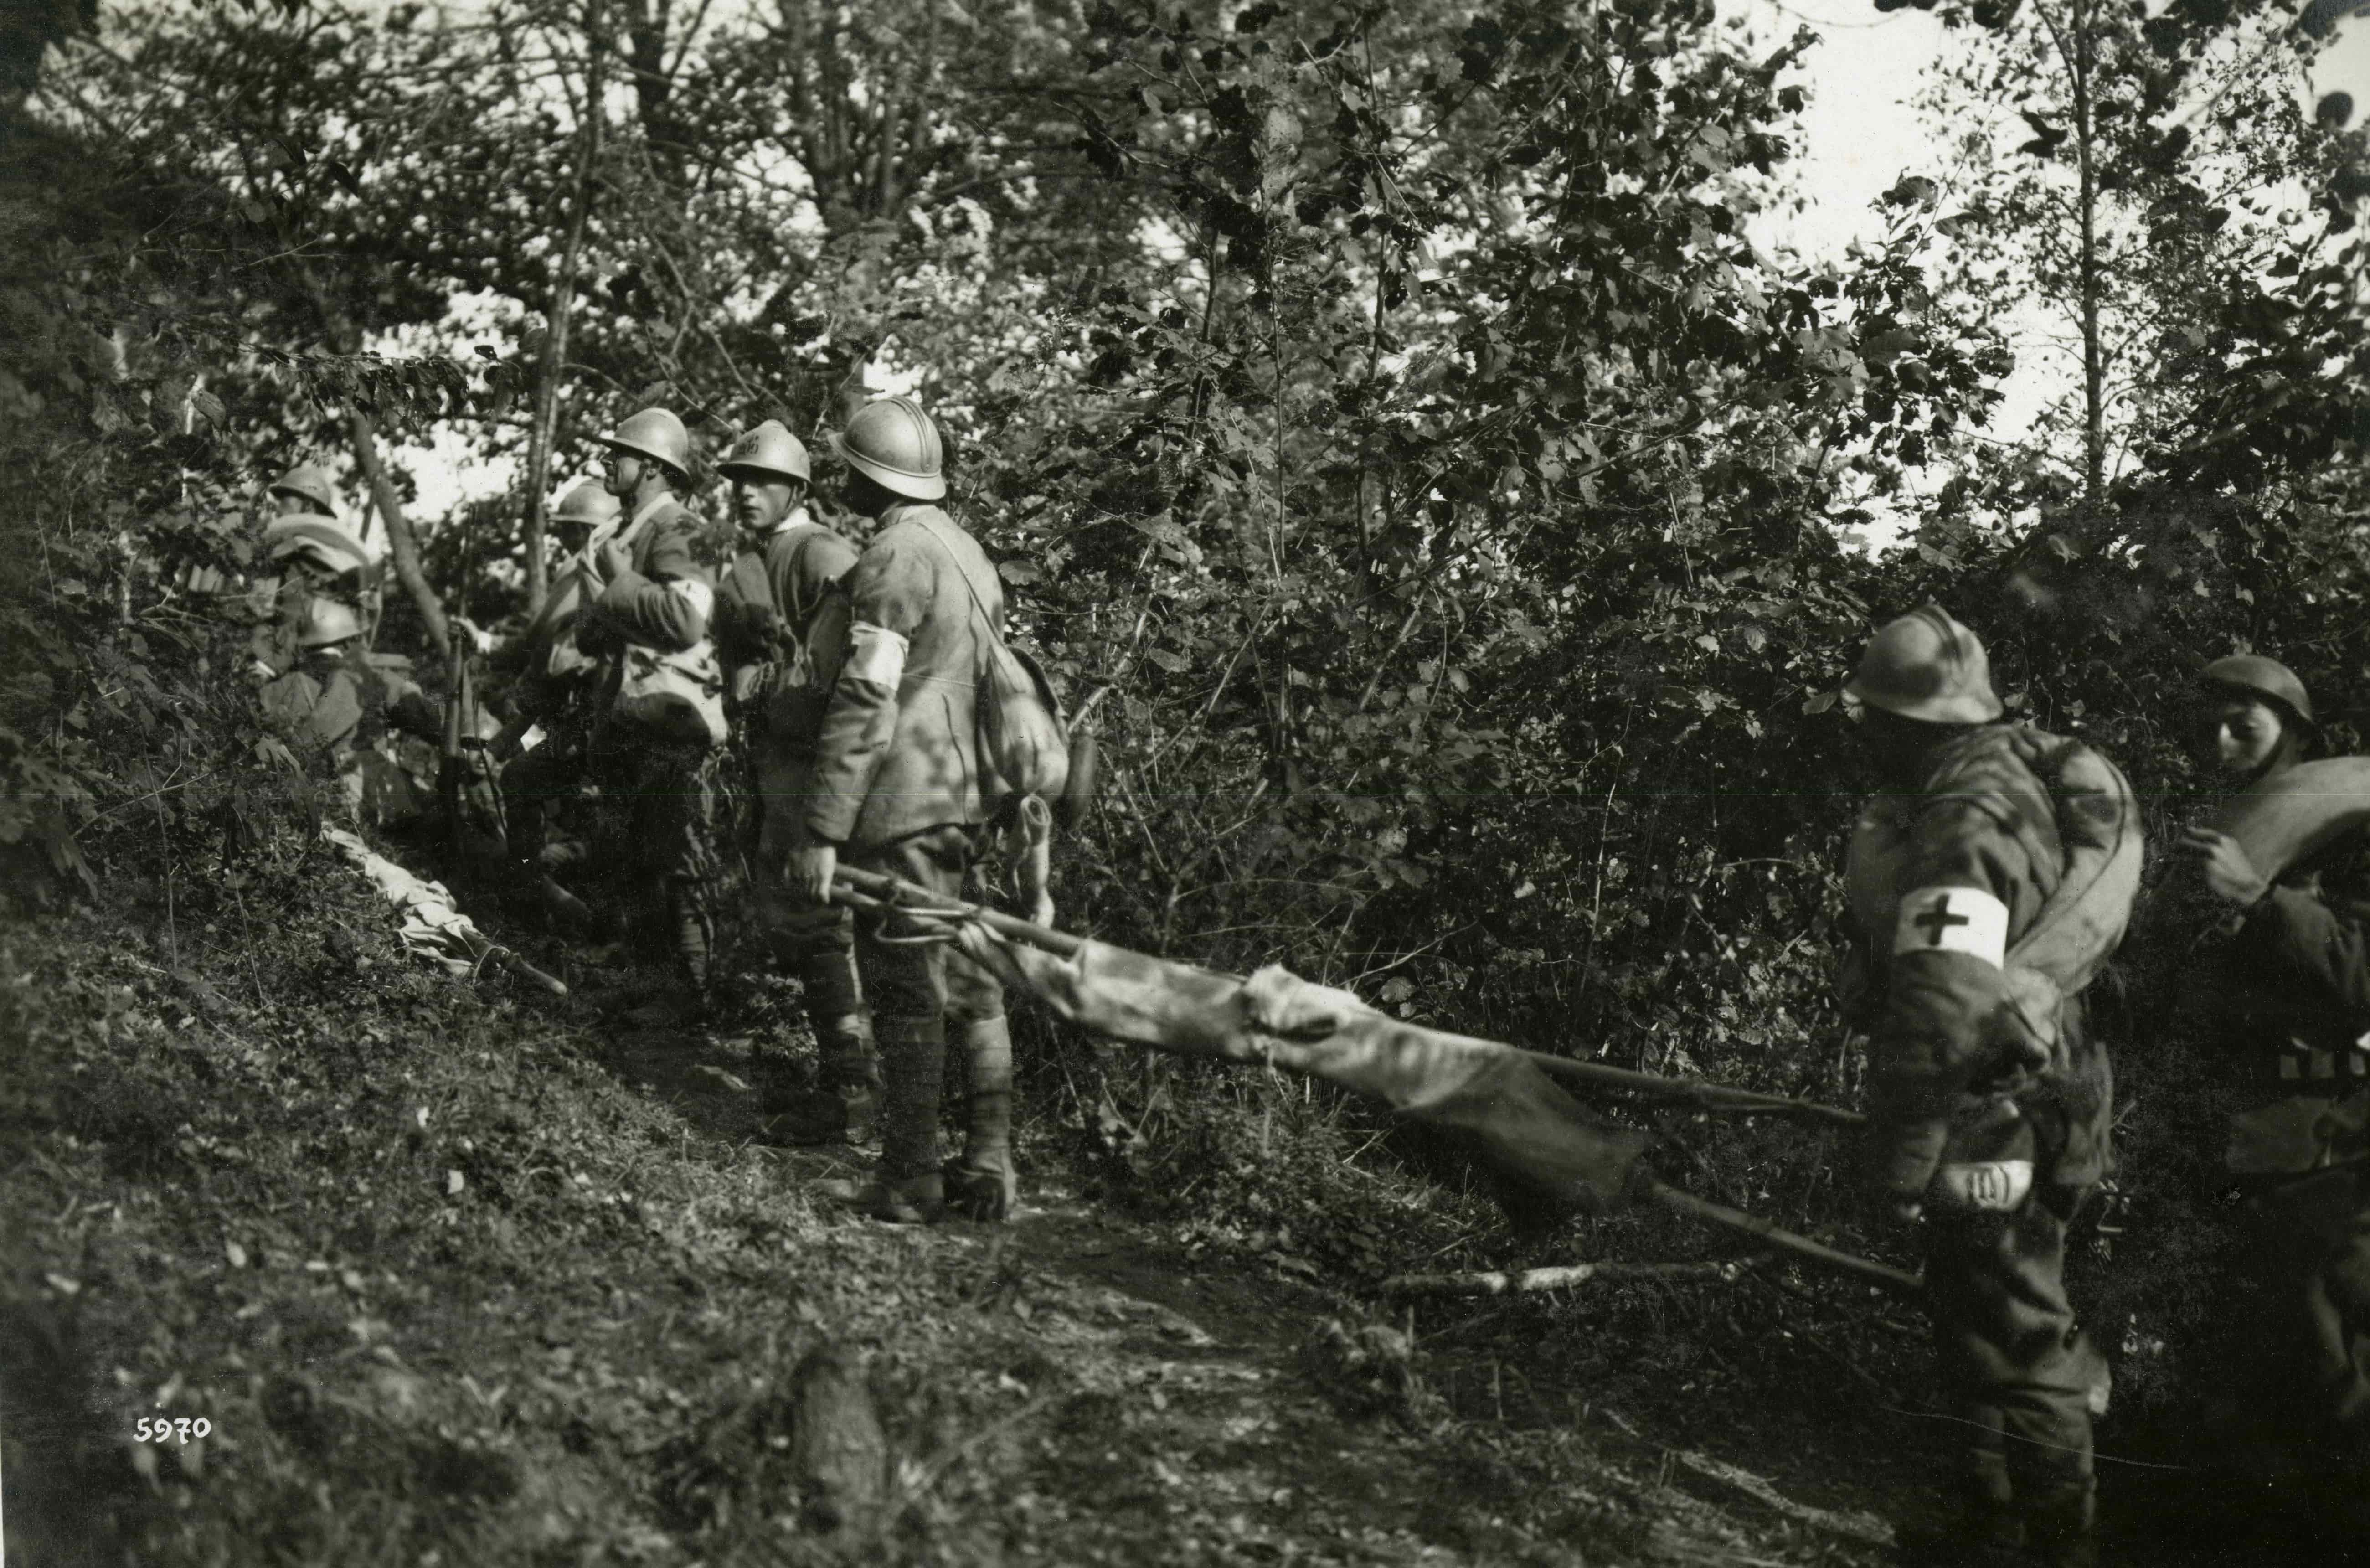 La sanità segue le truppe impegnate nell’offensiva. Ottobre 1918 [AF MSIGR 2/704]